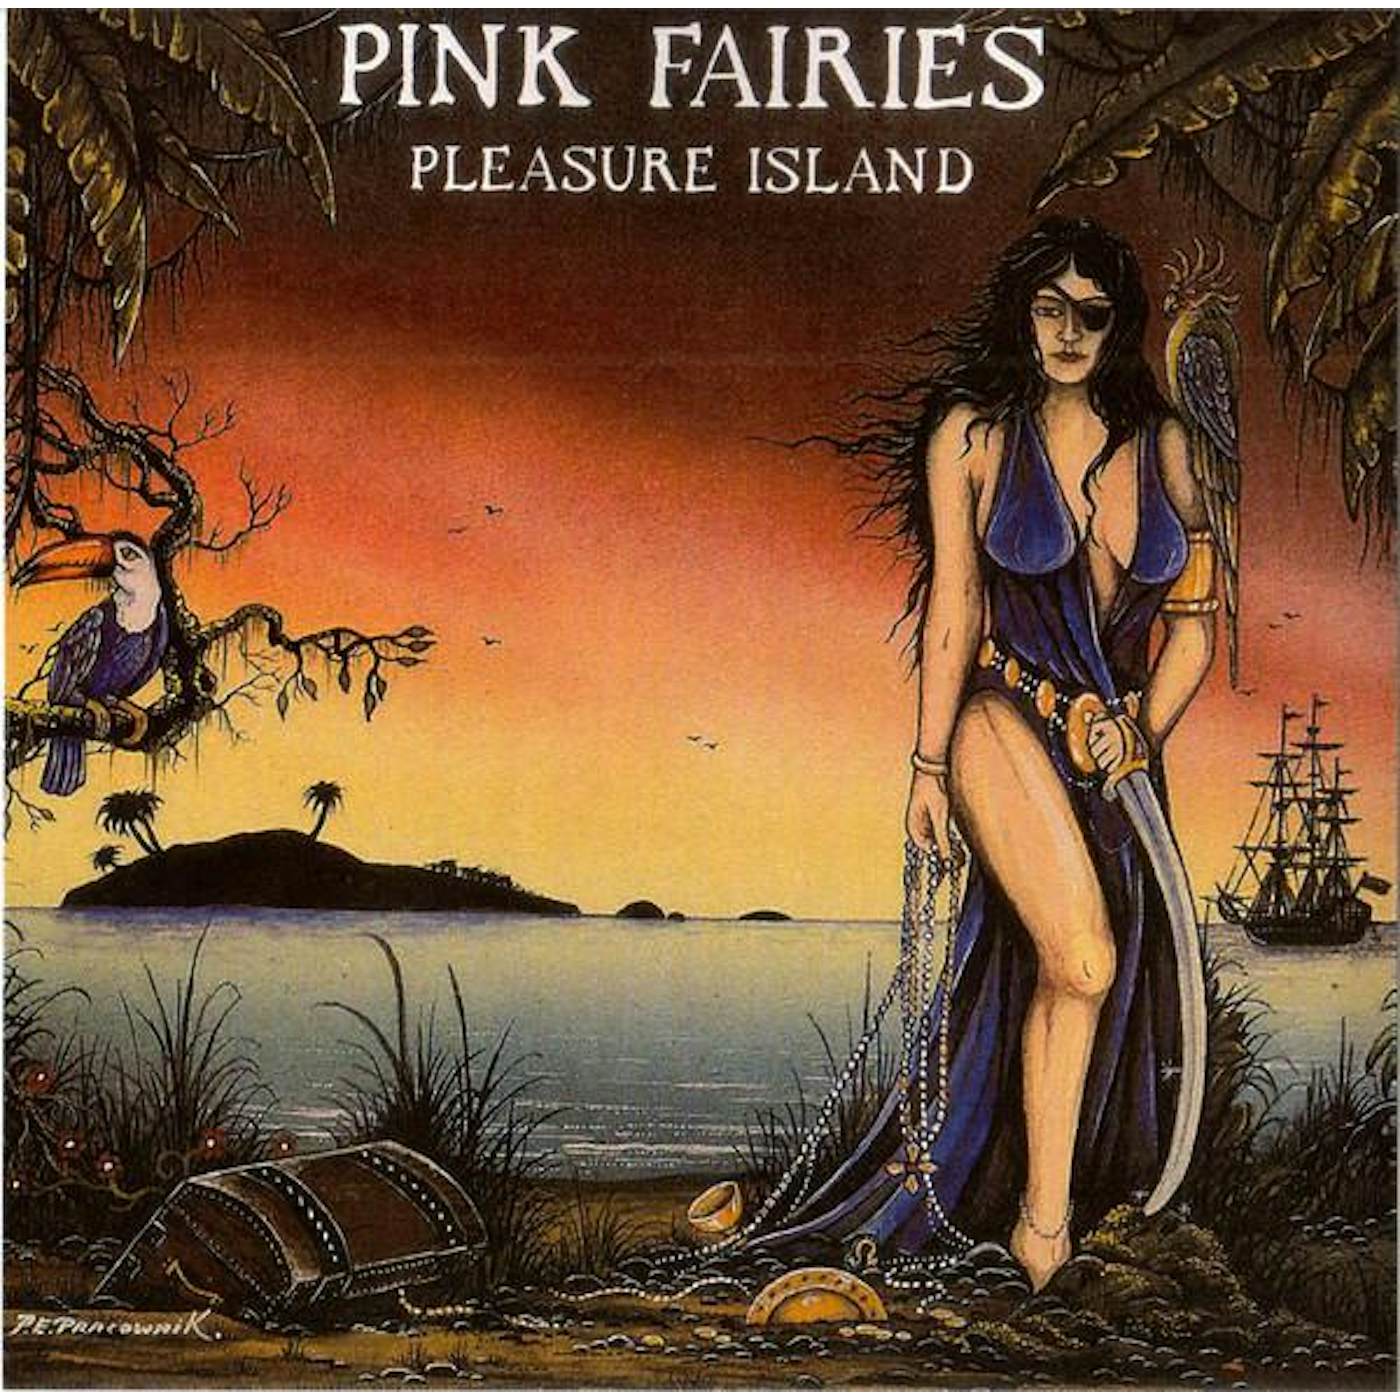 The Pink Fairies PLEASURE ISLAND CD